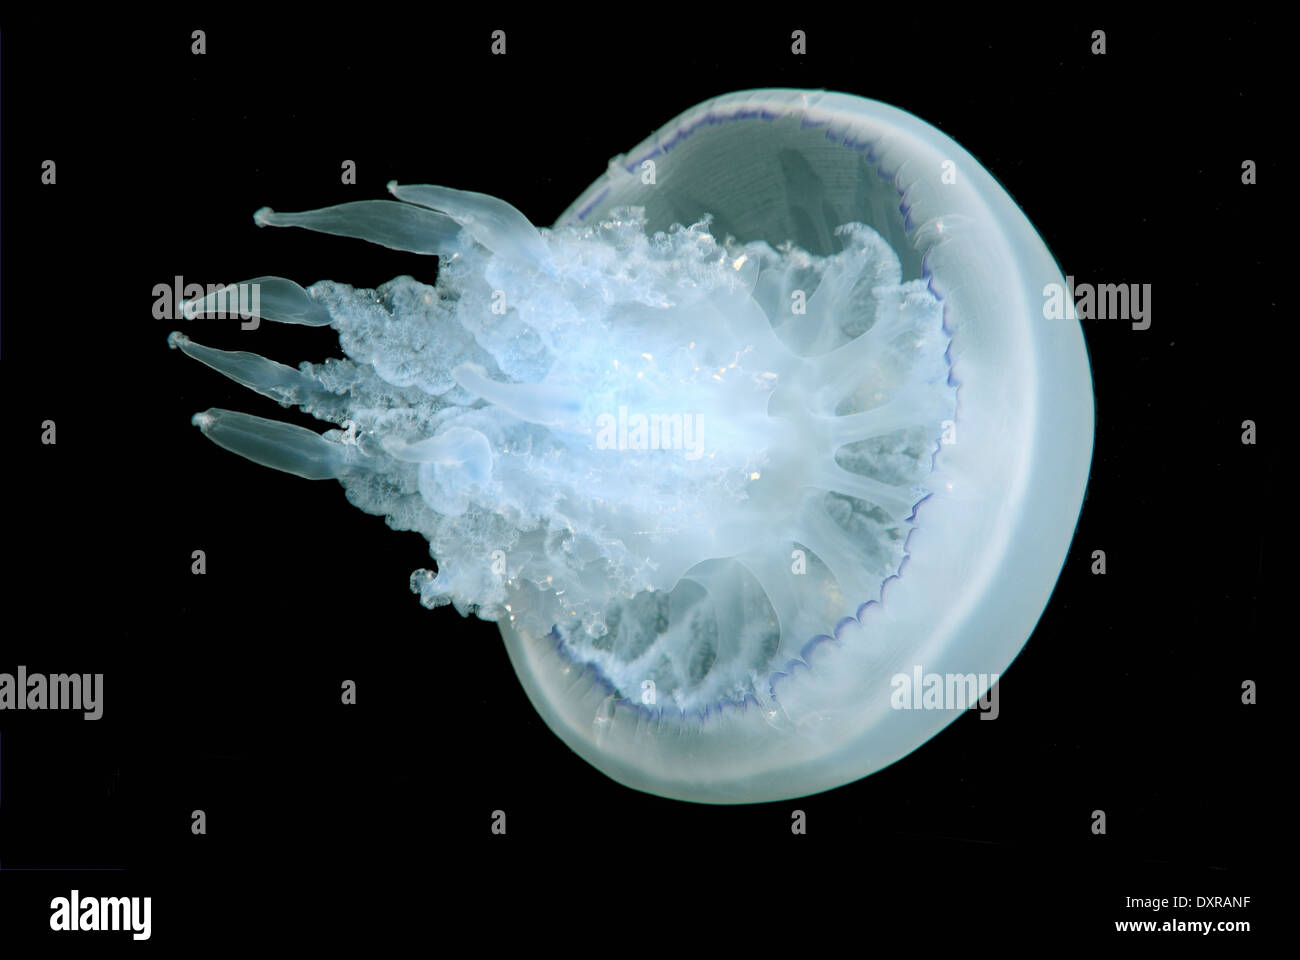 Barrel jellyfish, dustbin-lid jellyfish or frilly-mouthed jellyfish (Rhizostoma pulmo), Black Sea, Crimea, Russia Stock Photo